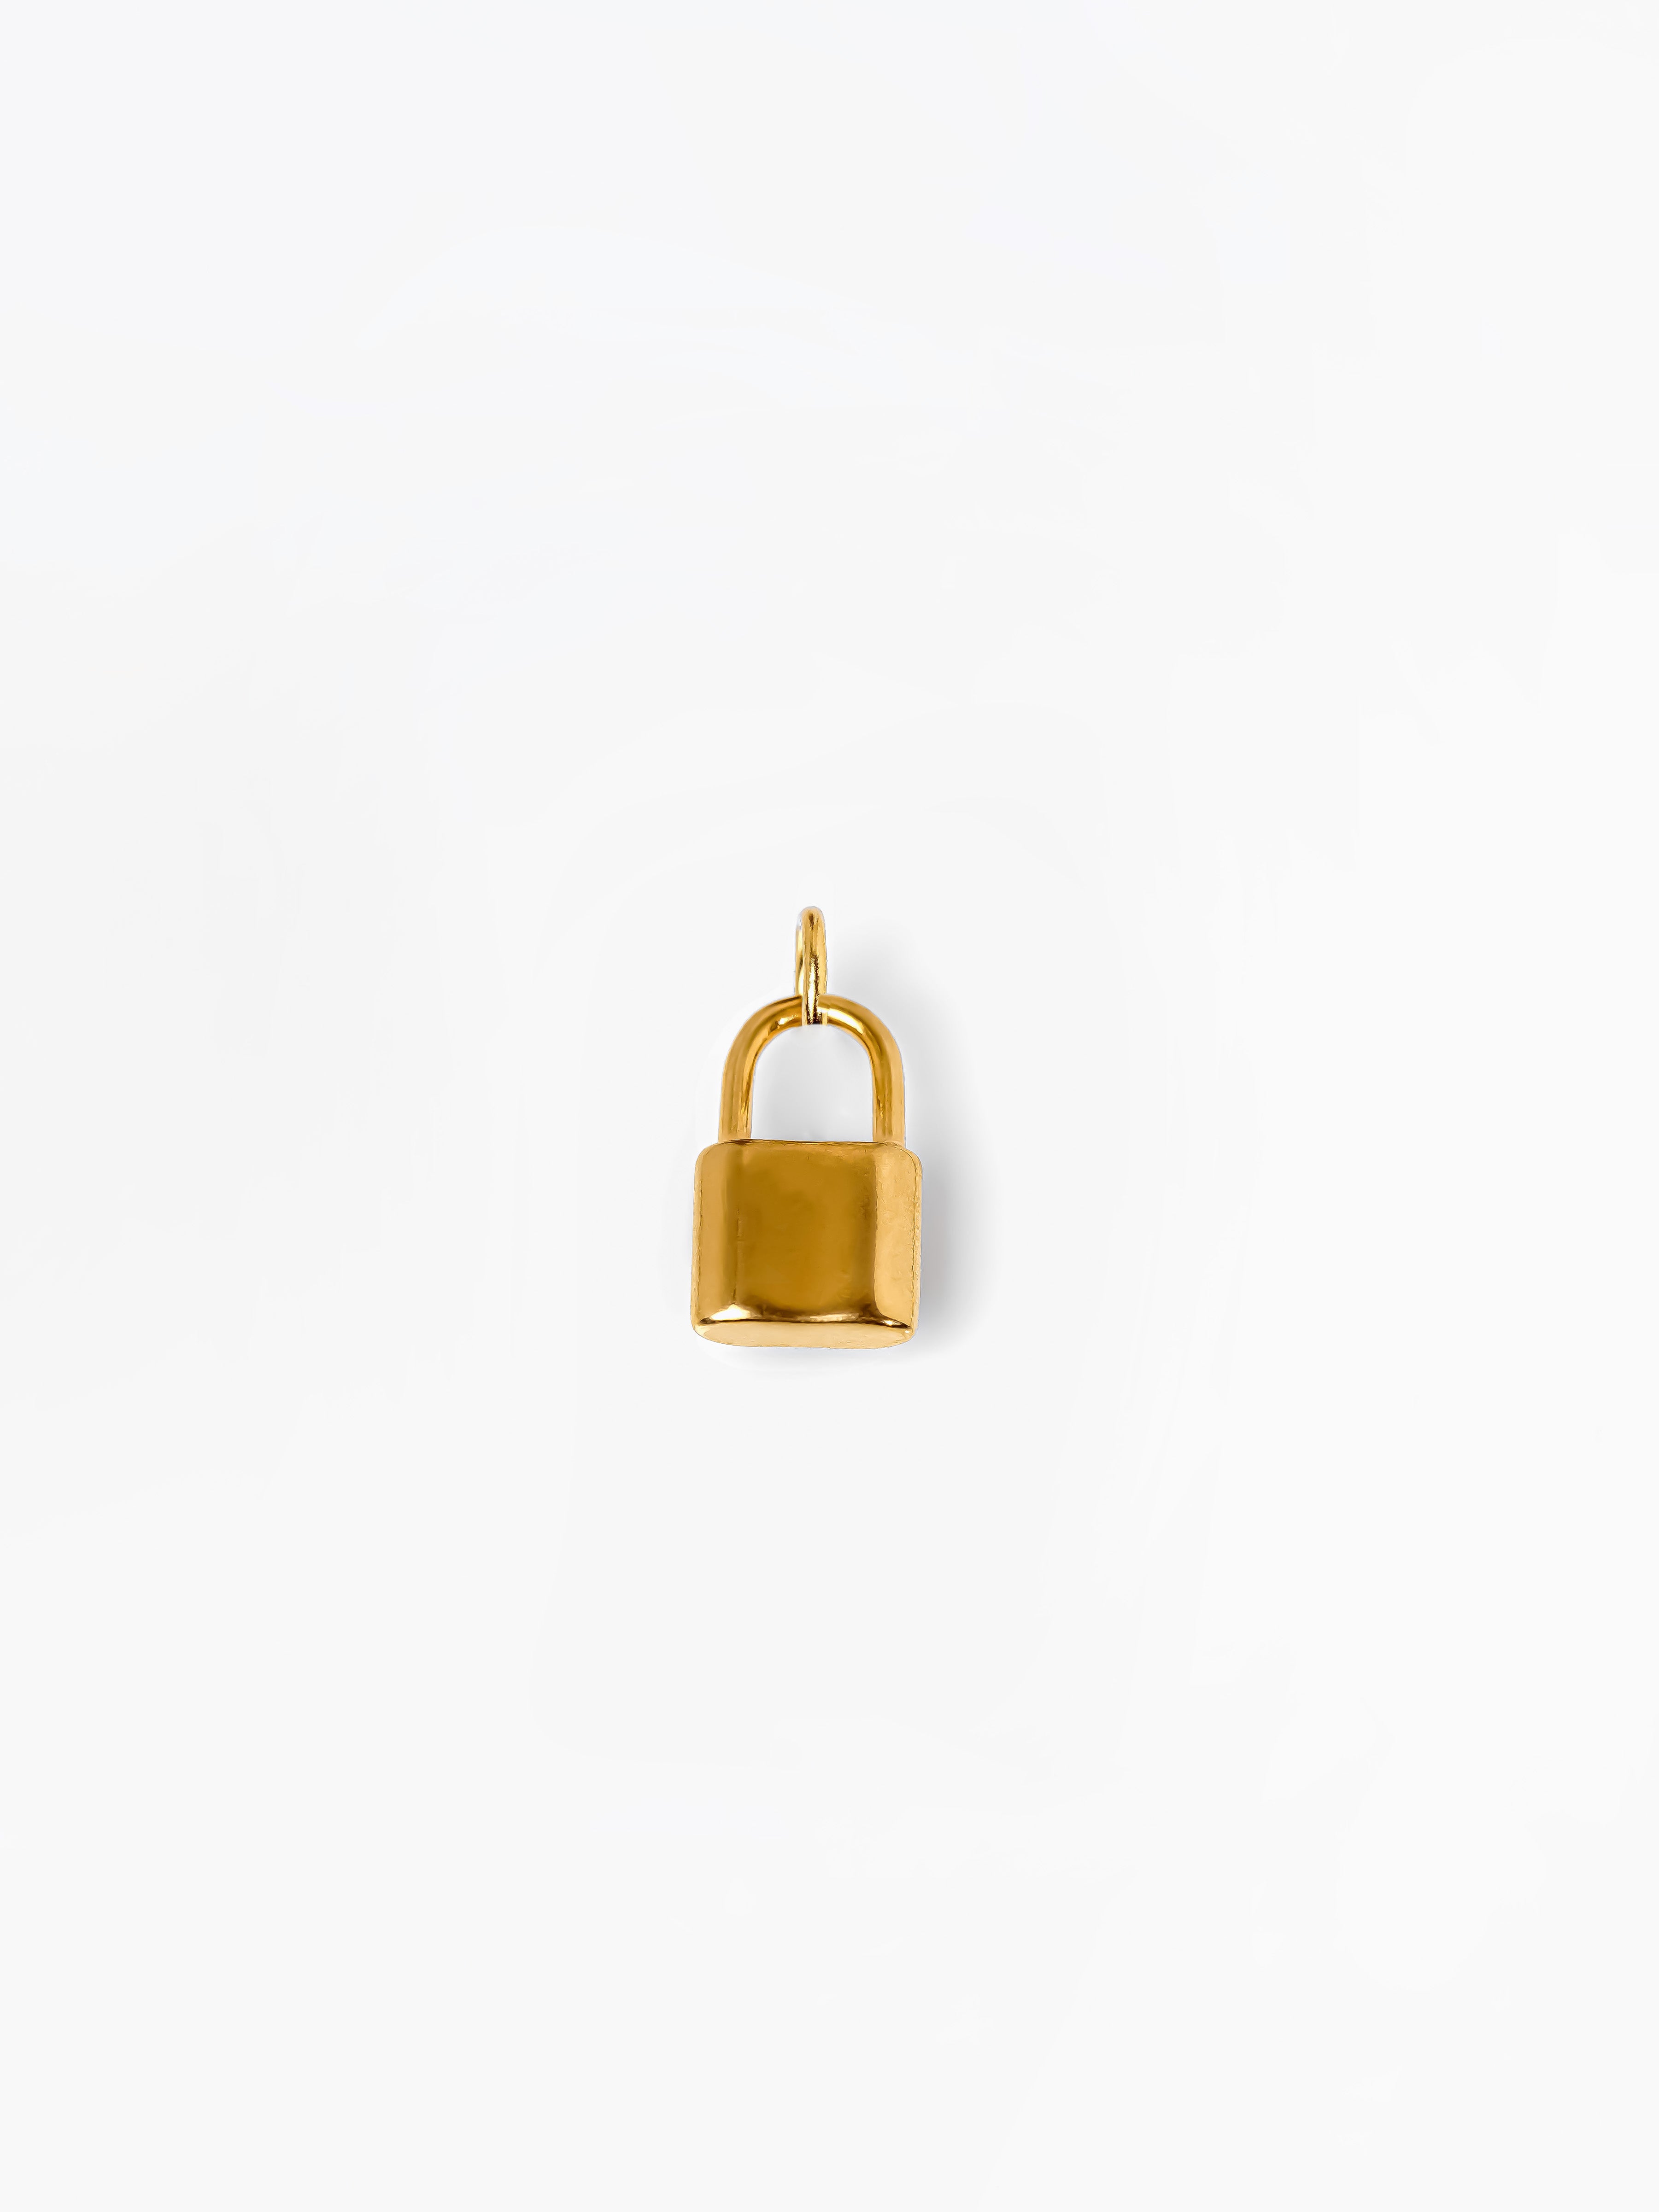 Gold Solid Padlock Pendant / Charm